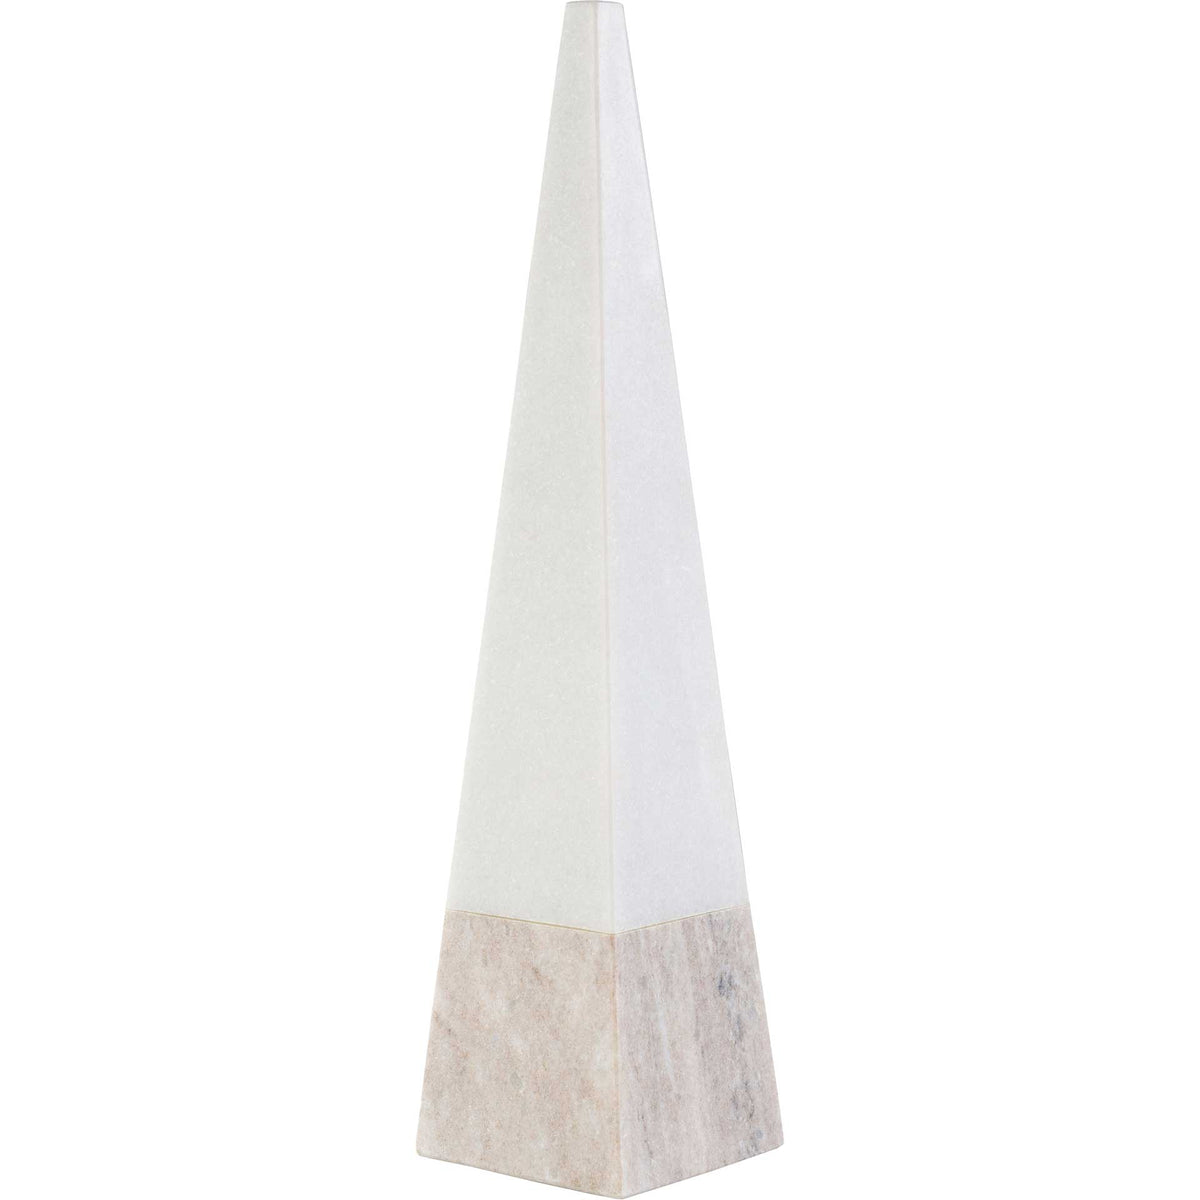 Pyramidal Decorative Accent Brown/White